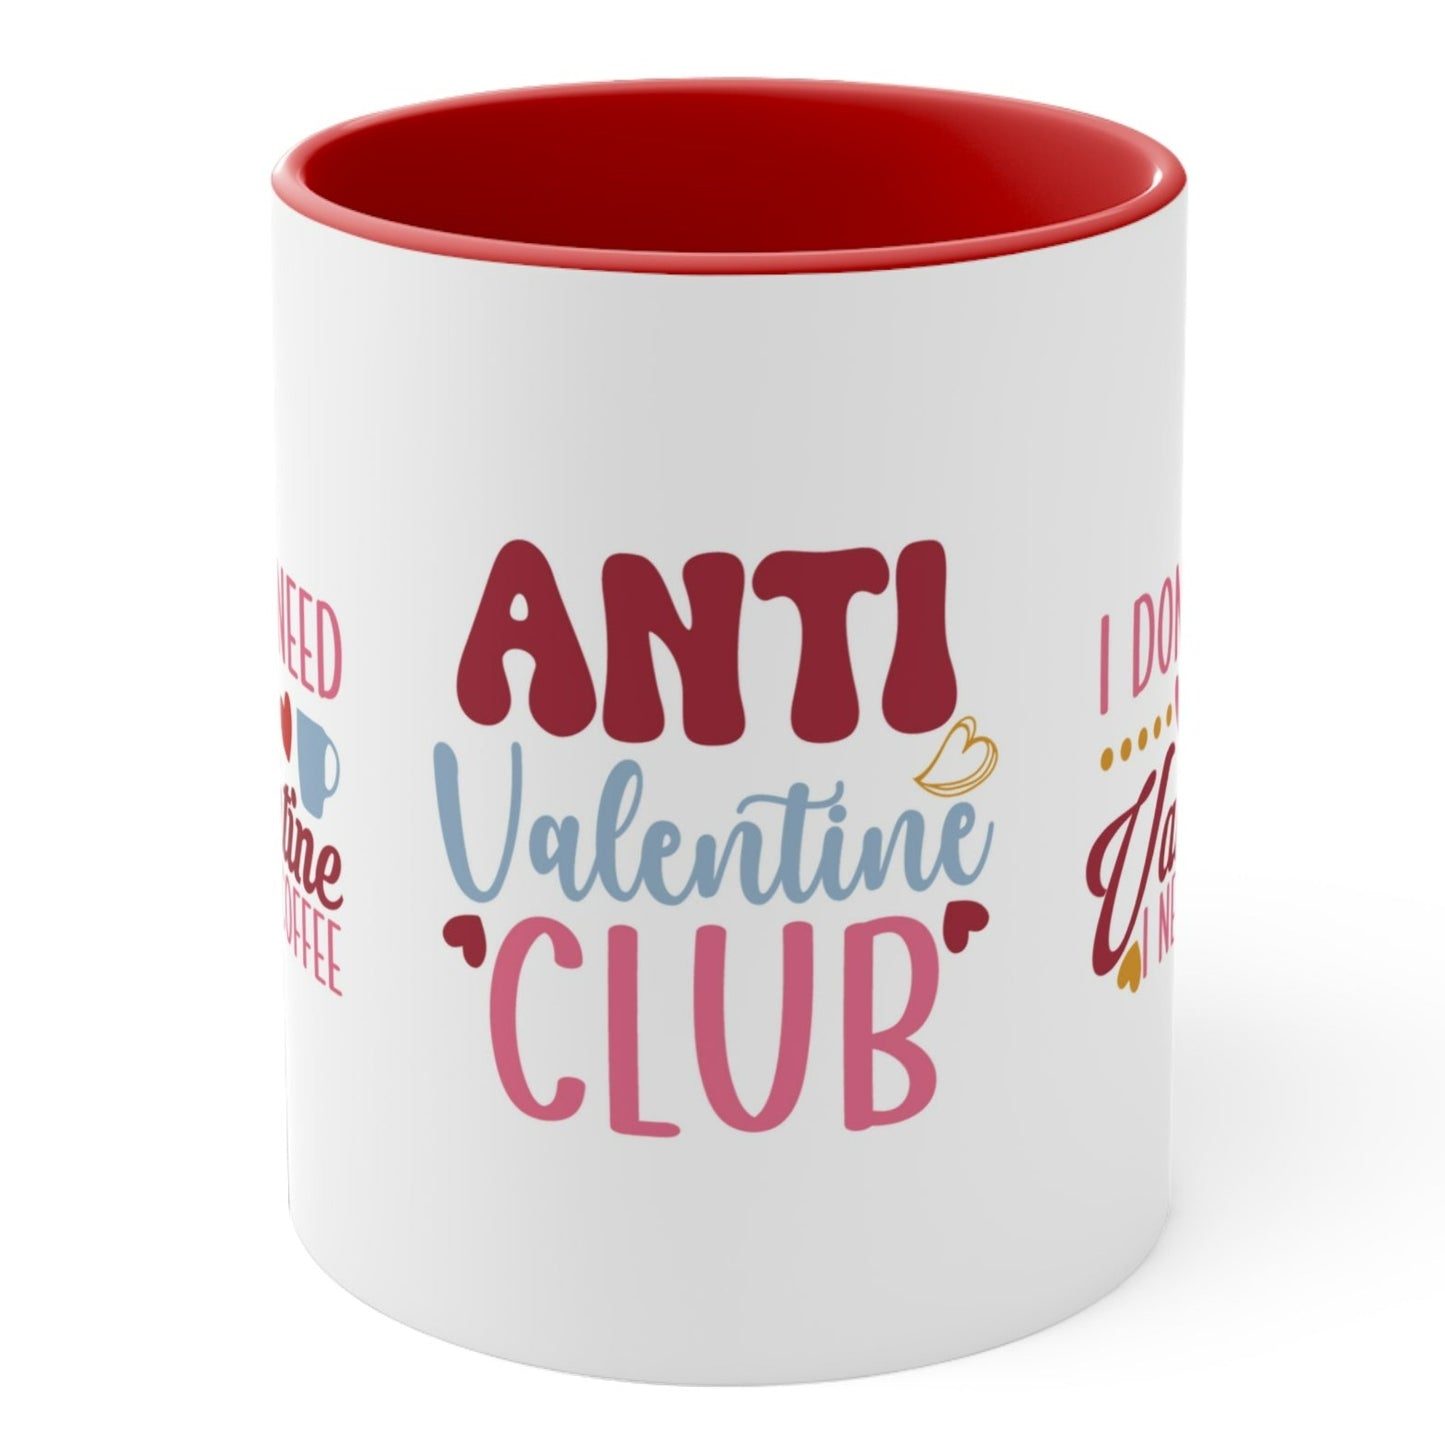 ANTI VALENTINE MUG, I don't Need a Valentine I Need Coffee, Anti Valentine Gift, Anti Valentine, Coffee Mugs, Valentines Funny Mugs